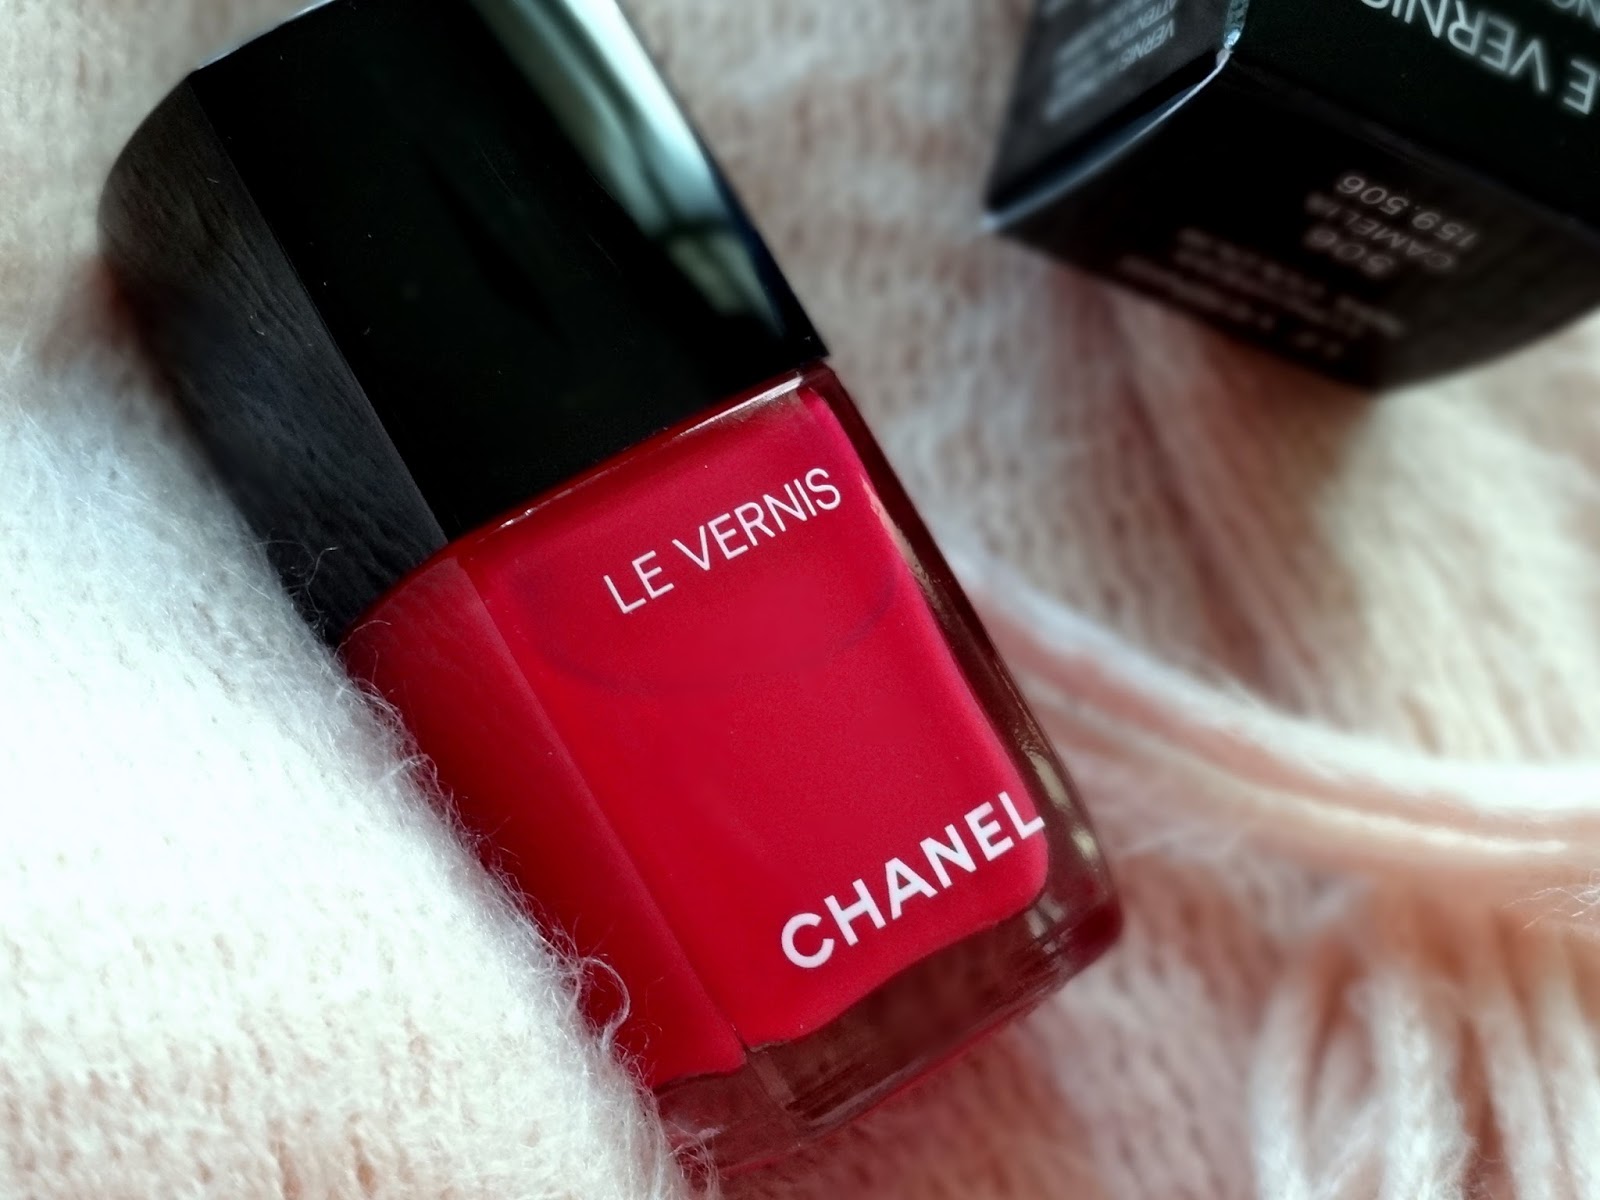 Must Have Orange Red: Chanel Arancio Vibrante Review